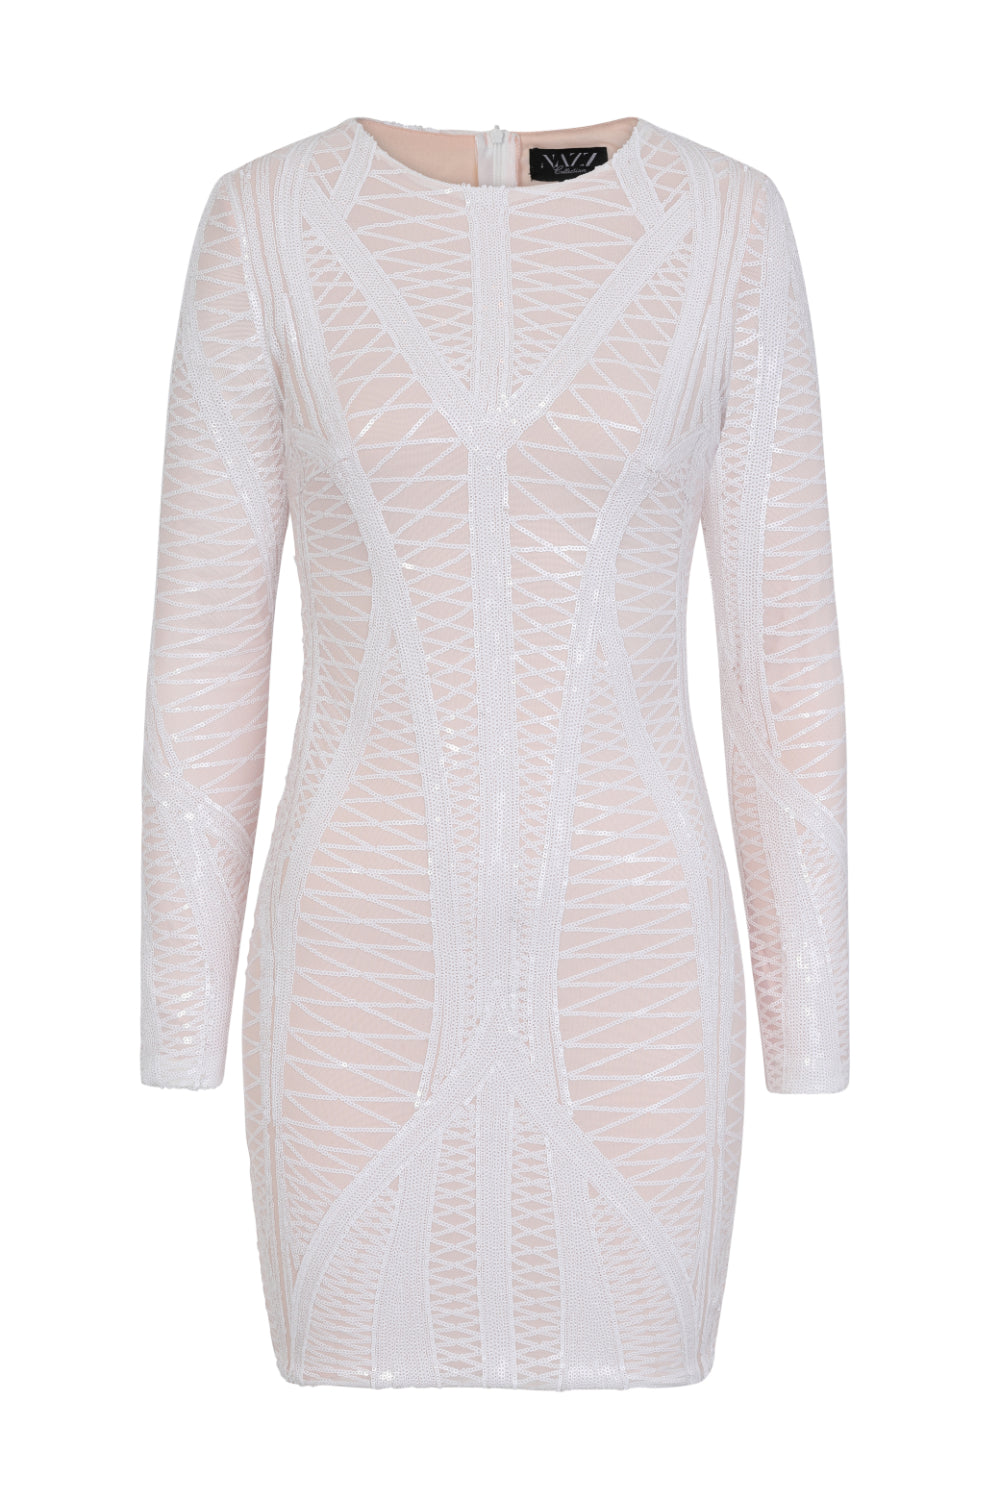 Hilton Luxe White Nude Cage Sequin Bandage Illusion Dress